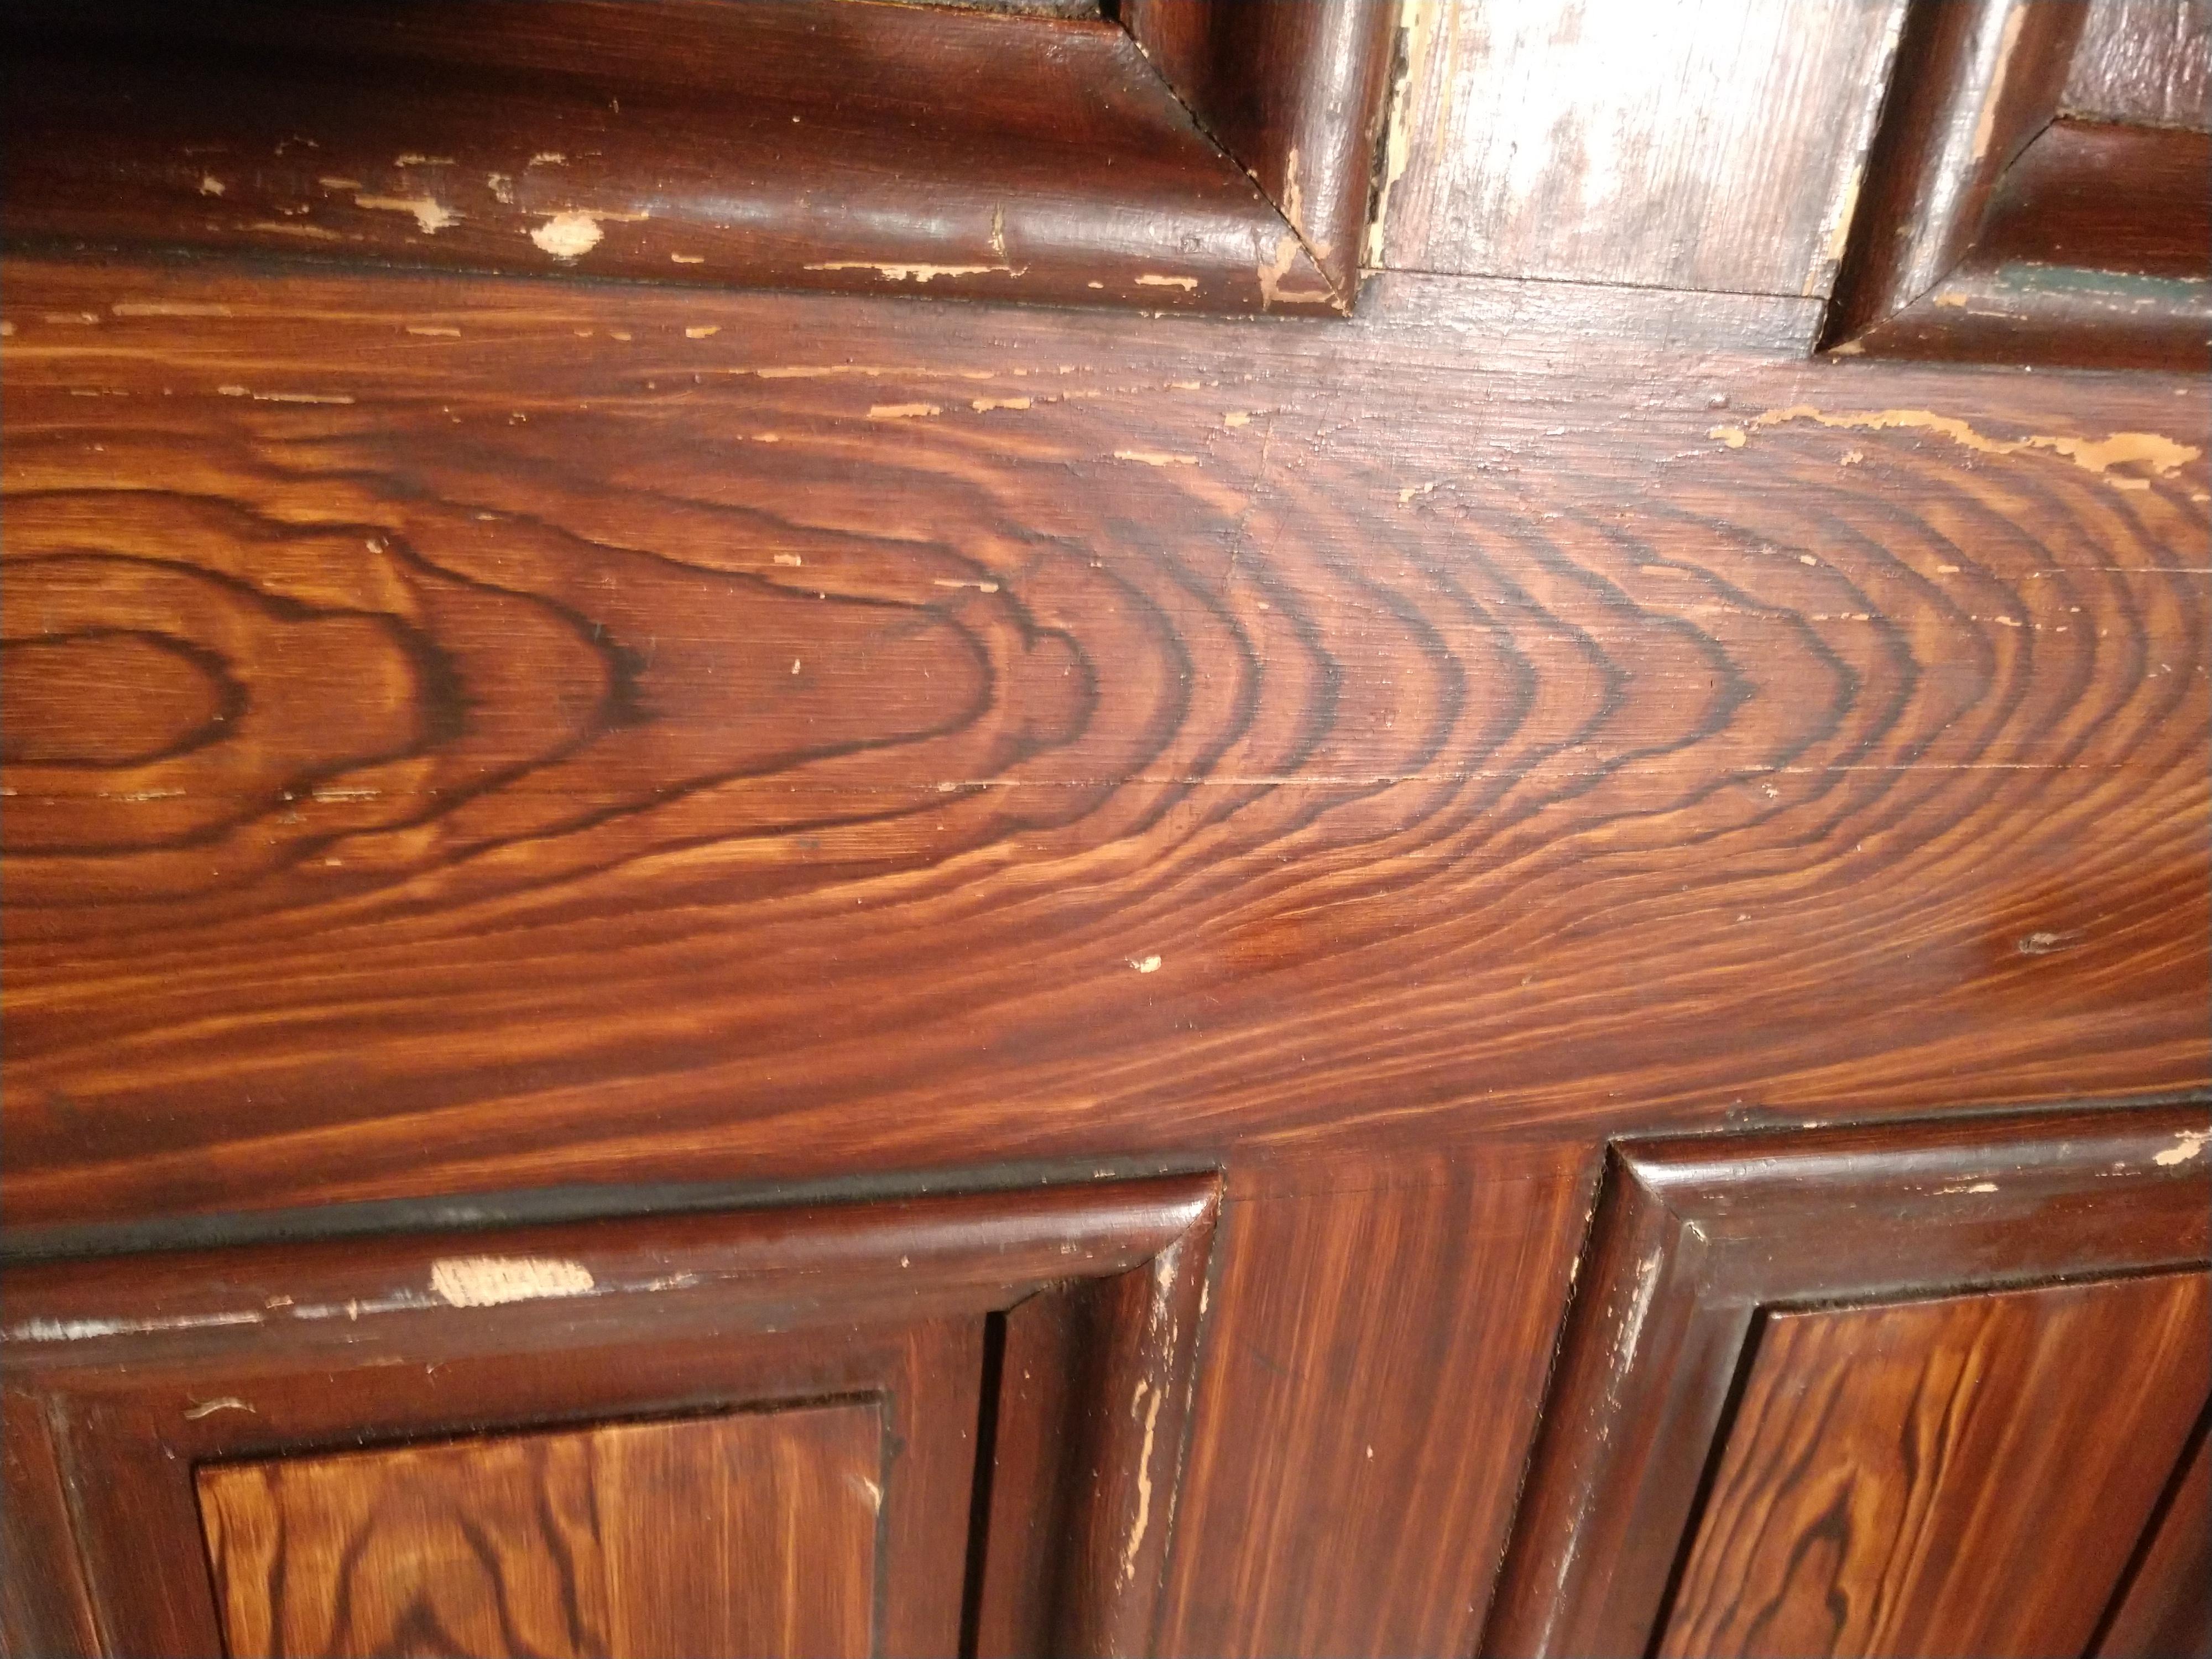 19th Century Grain Painted Paneled Wood Door For Sale 3